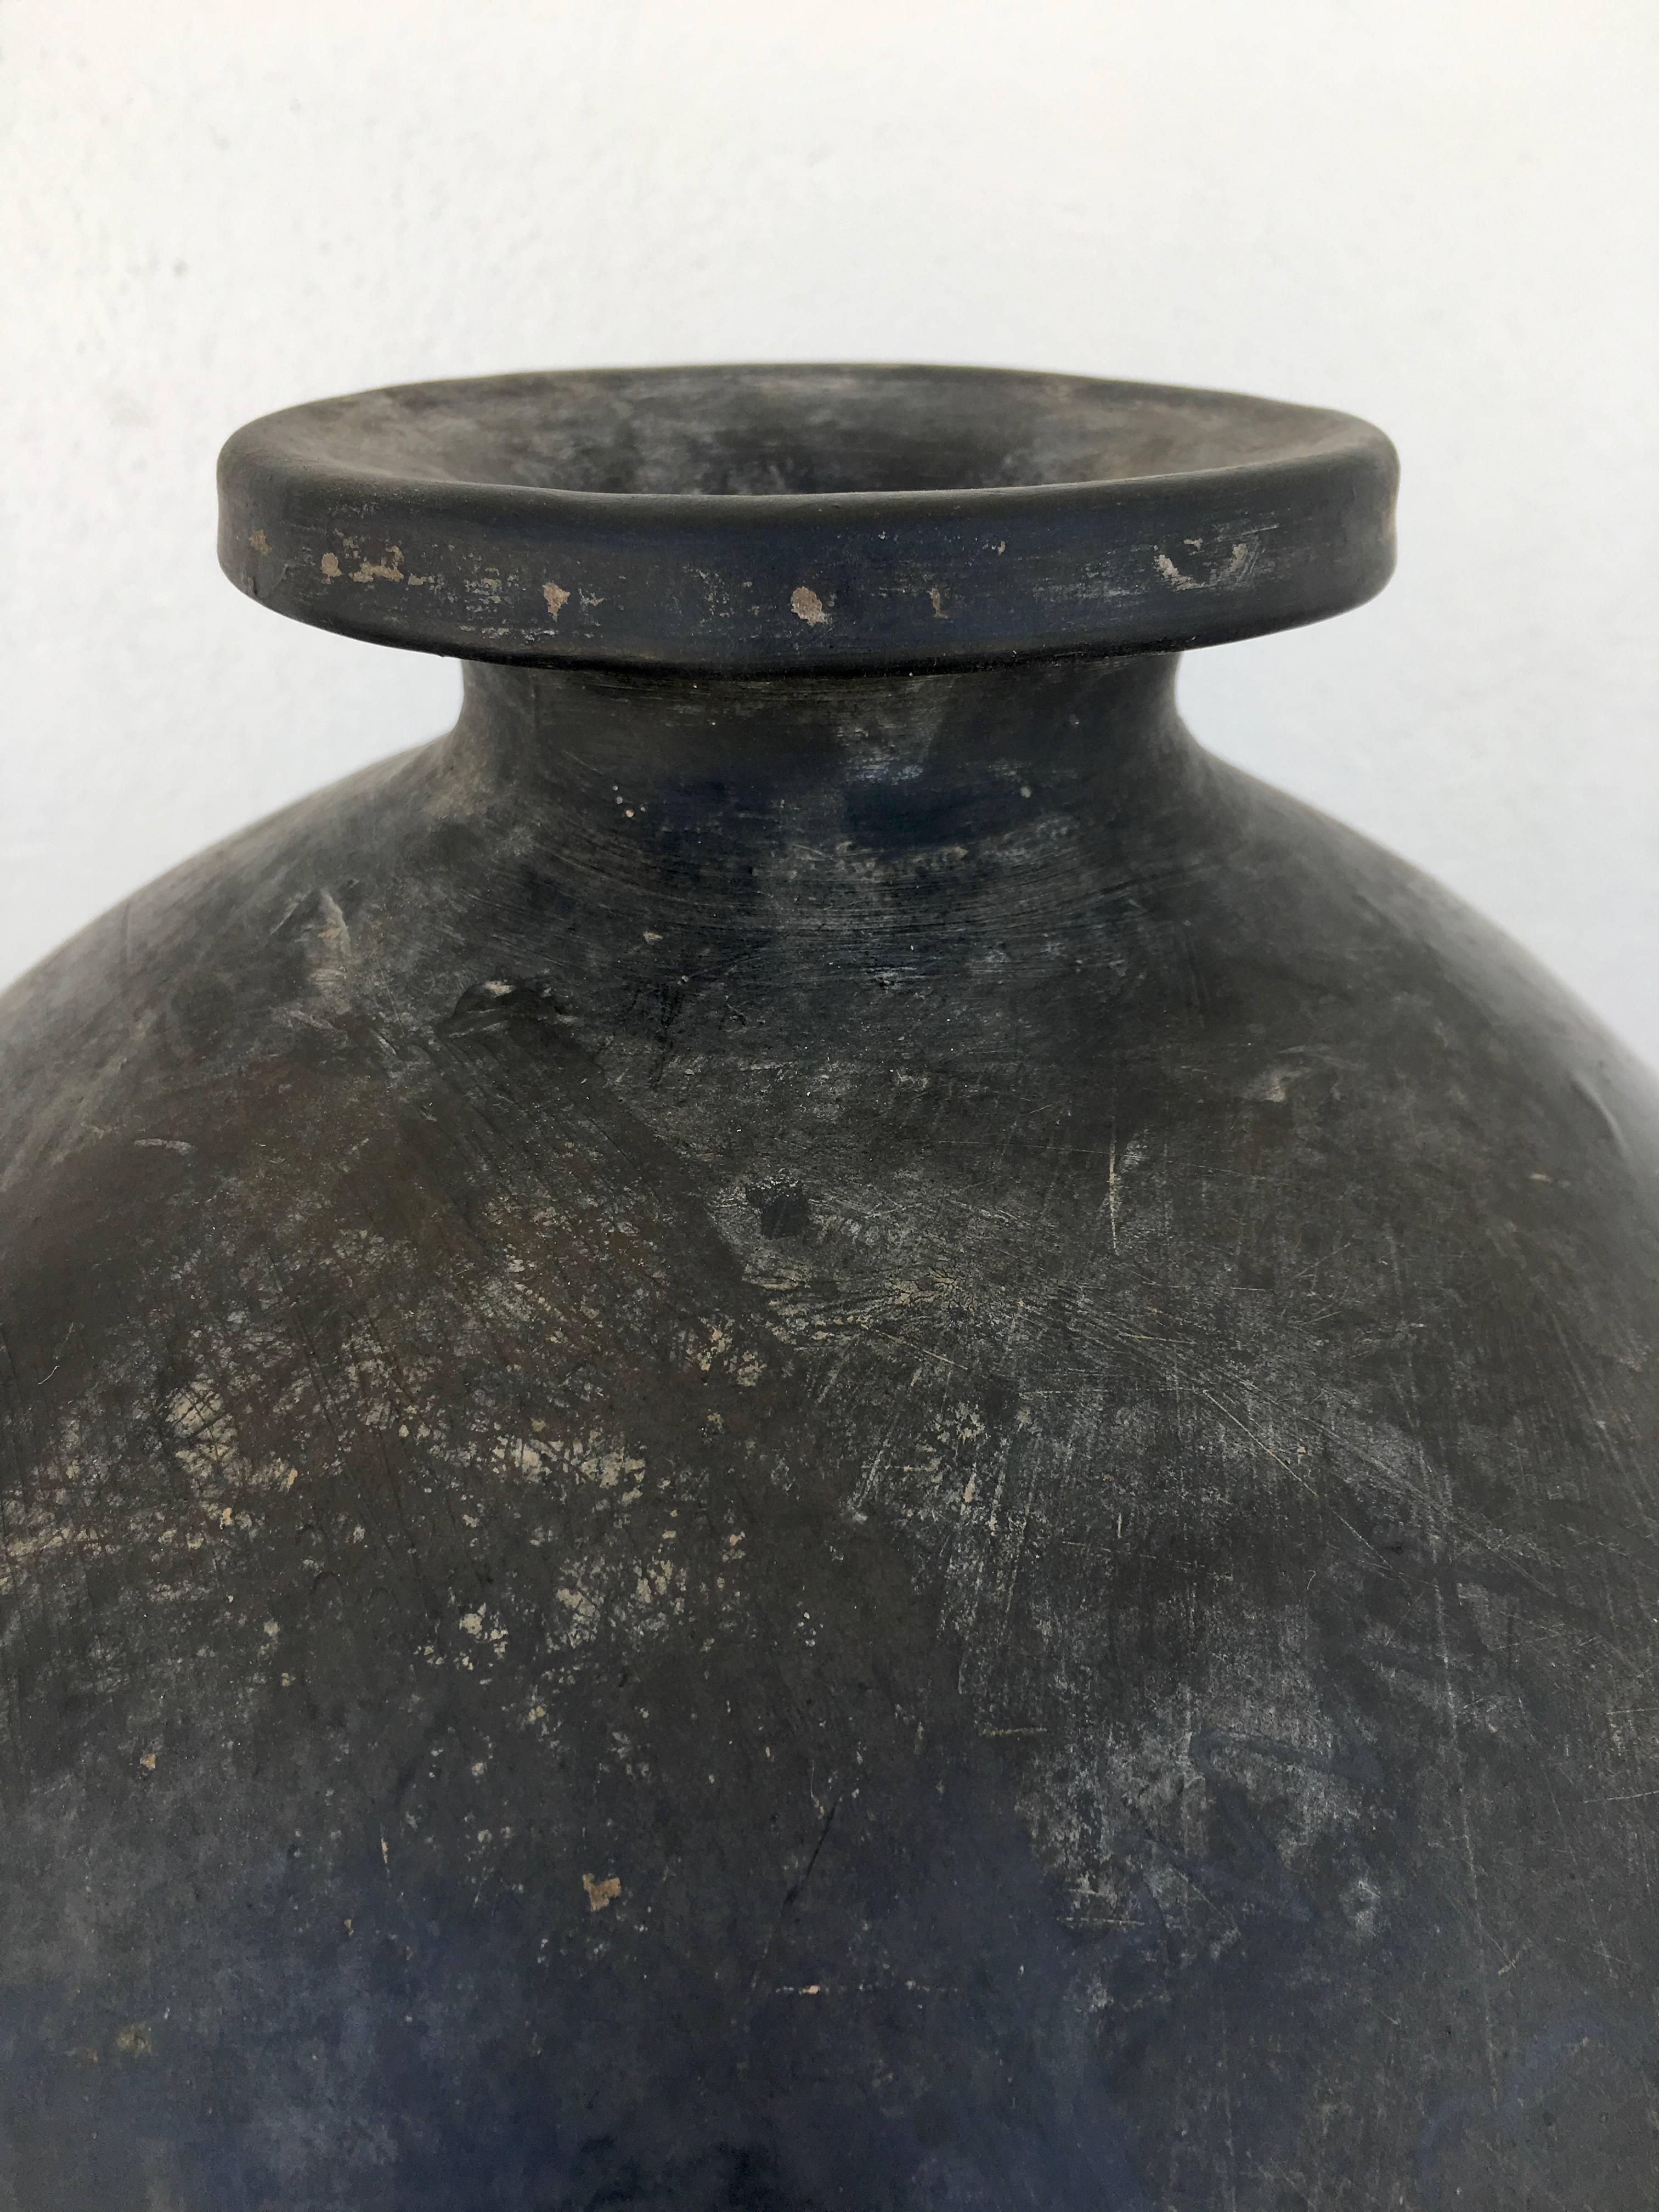 Vintage black clay teardrop vessel from the 1960s.